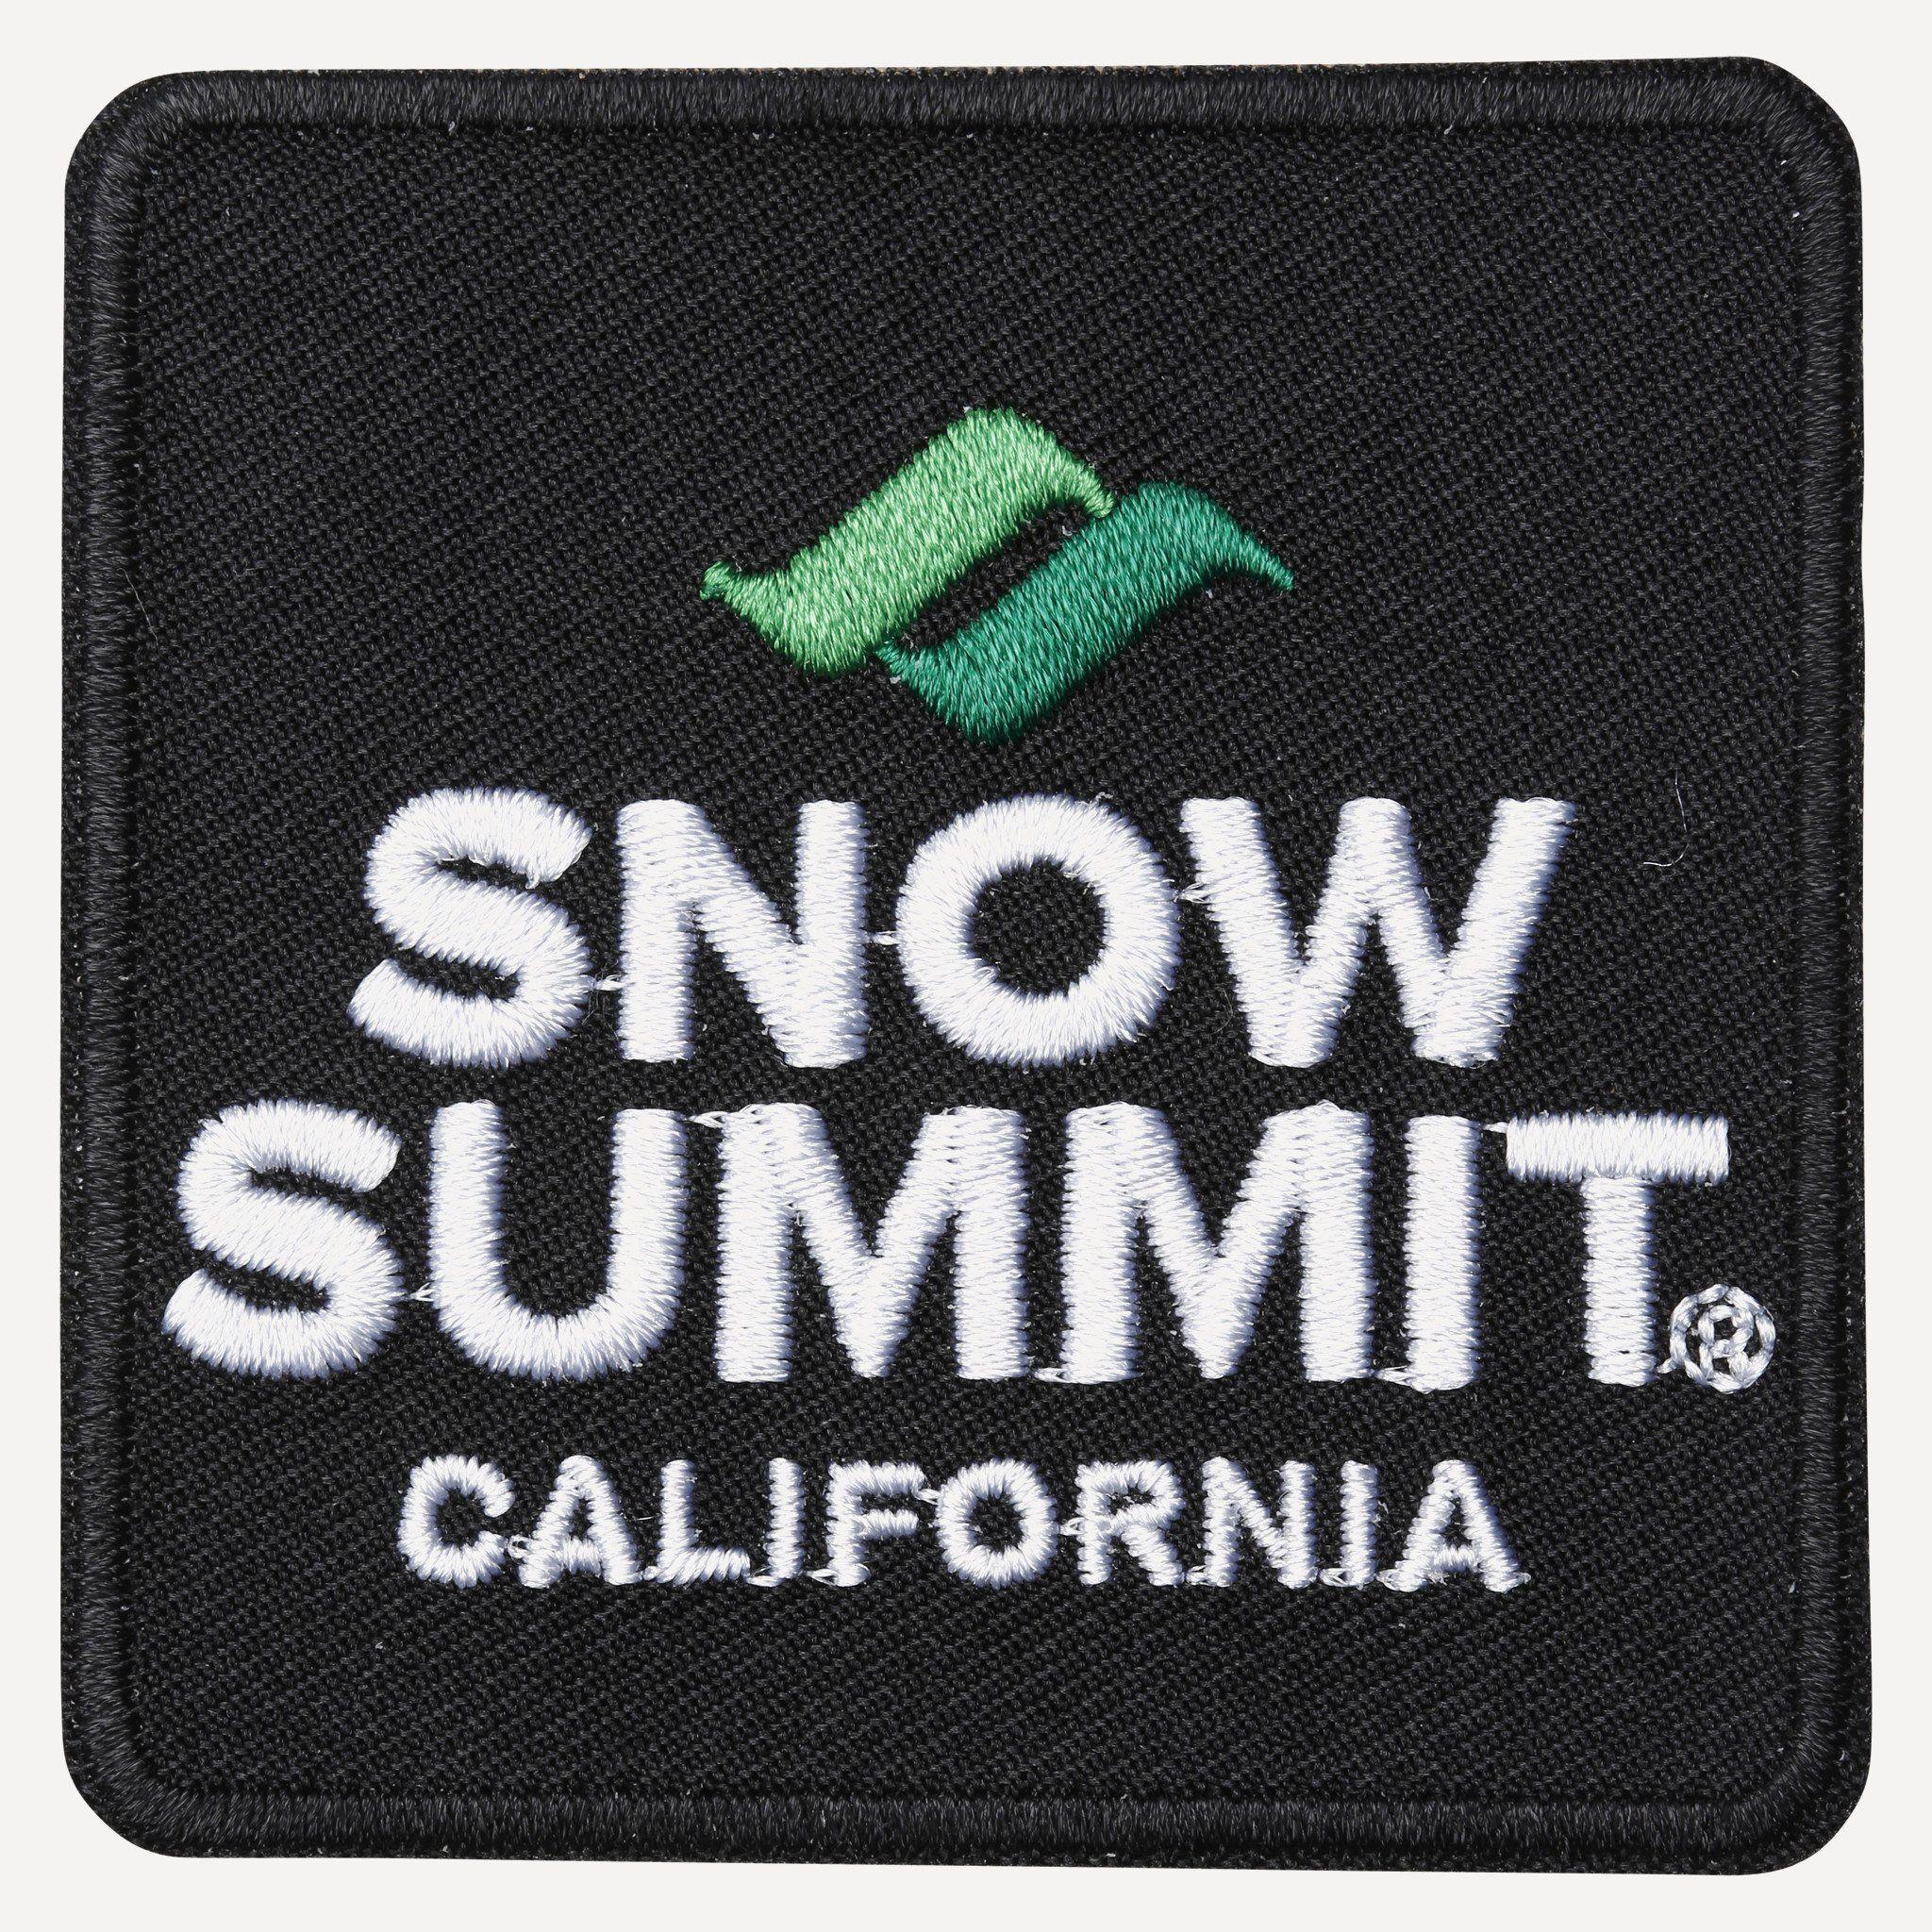 Snow Summit Logo - Snow Summit Patch - Big Bear Mountain Resort